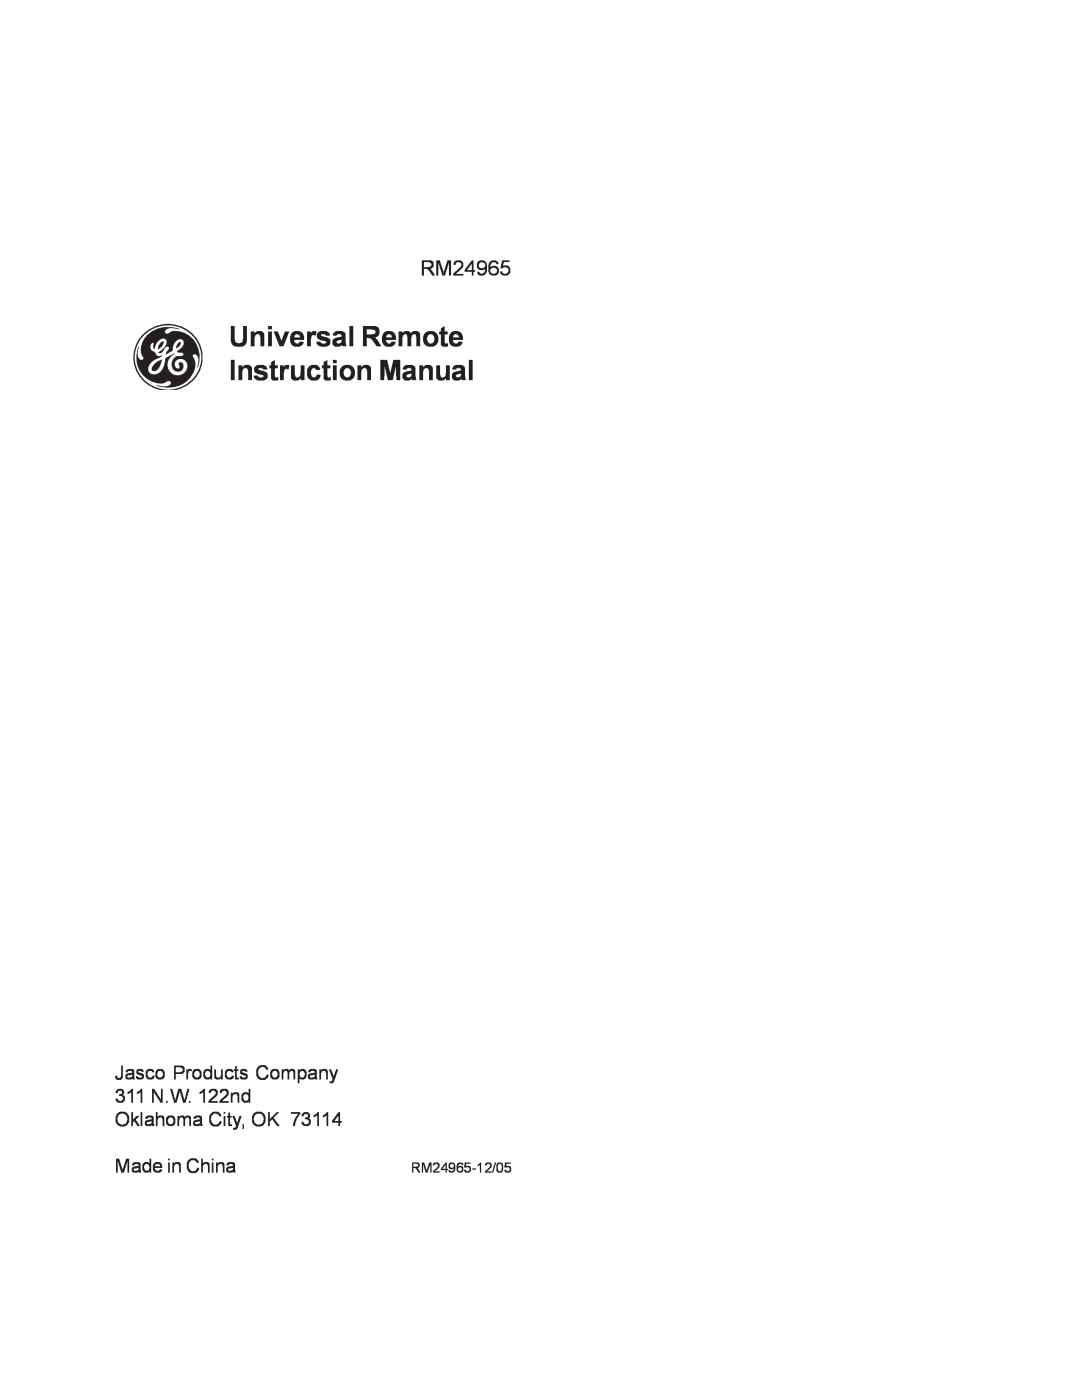 Jasco RM24965 Universal Remote Instruction Manual, Jasco Products Company 311 N.W. 122nd Oklahoma City, OK, Made in China 